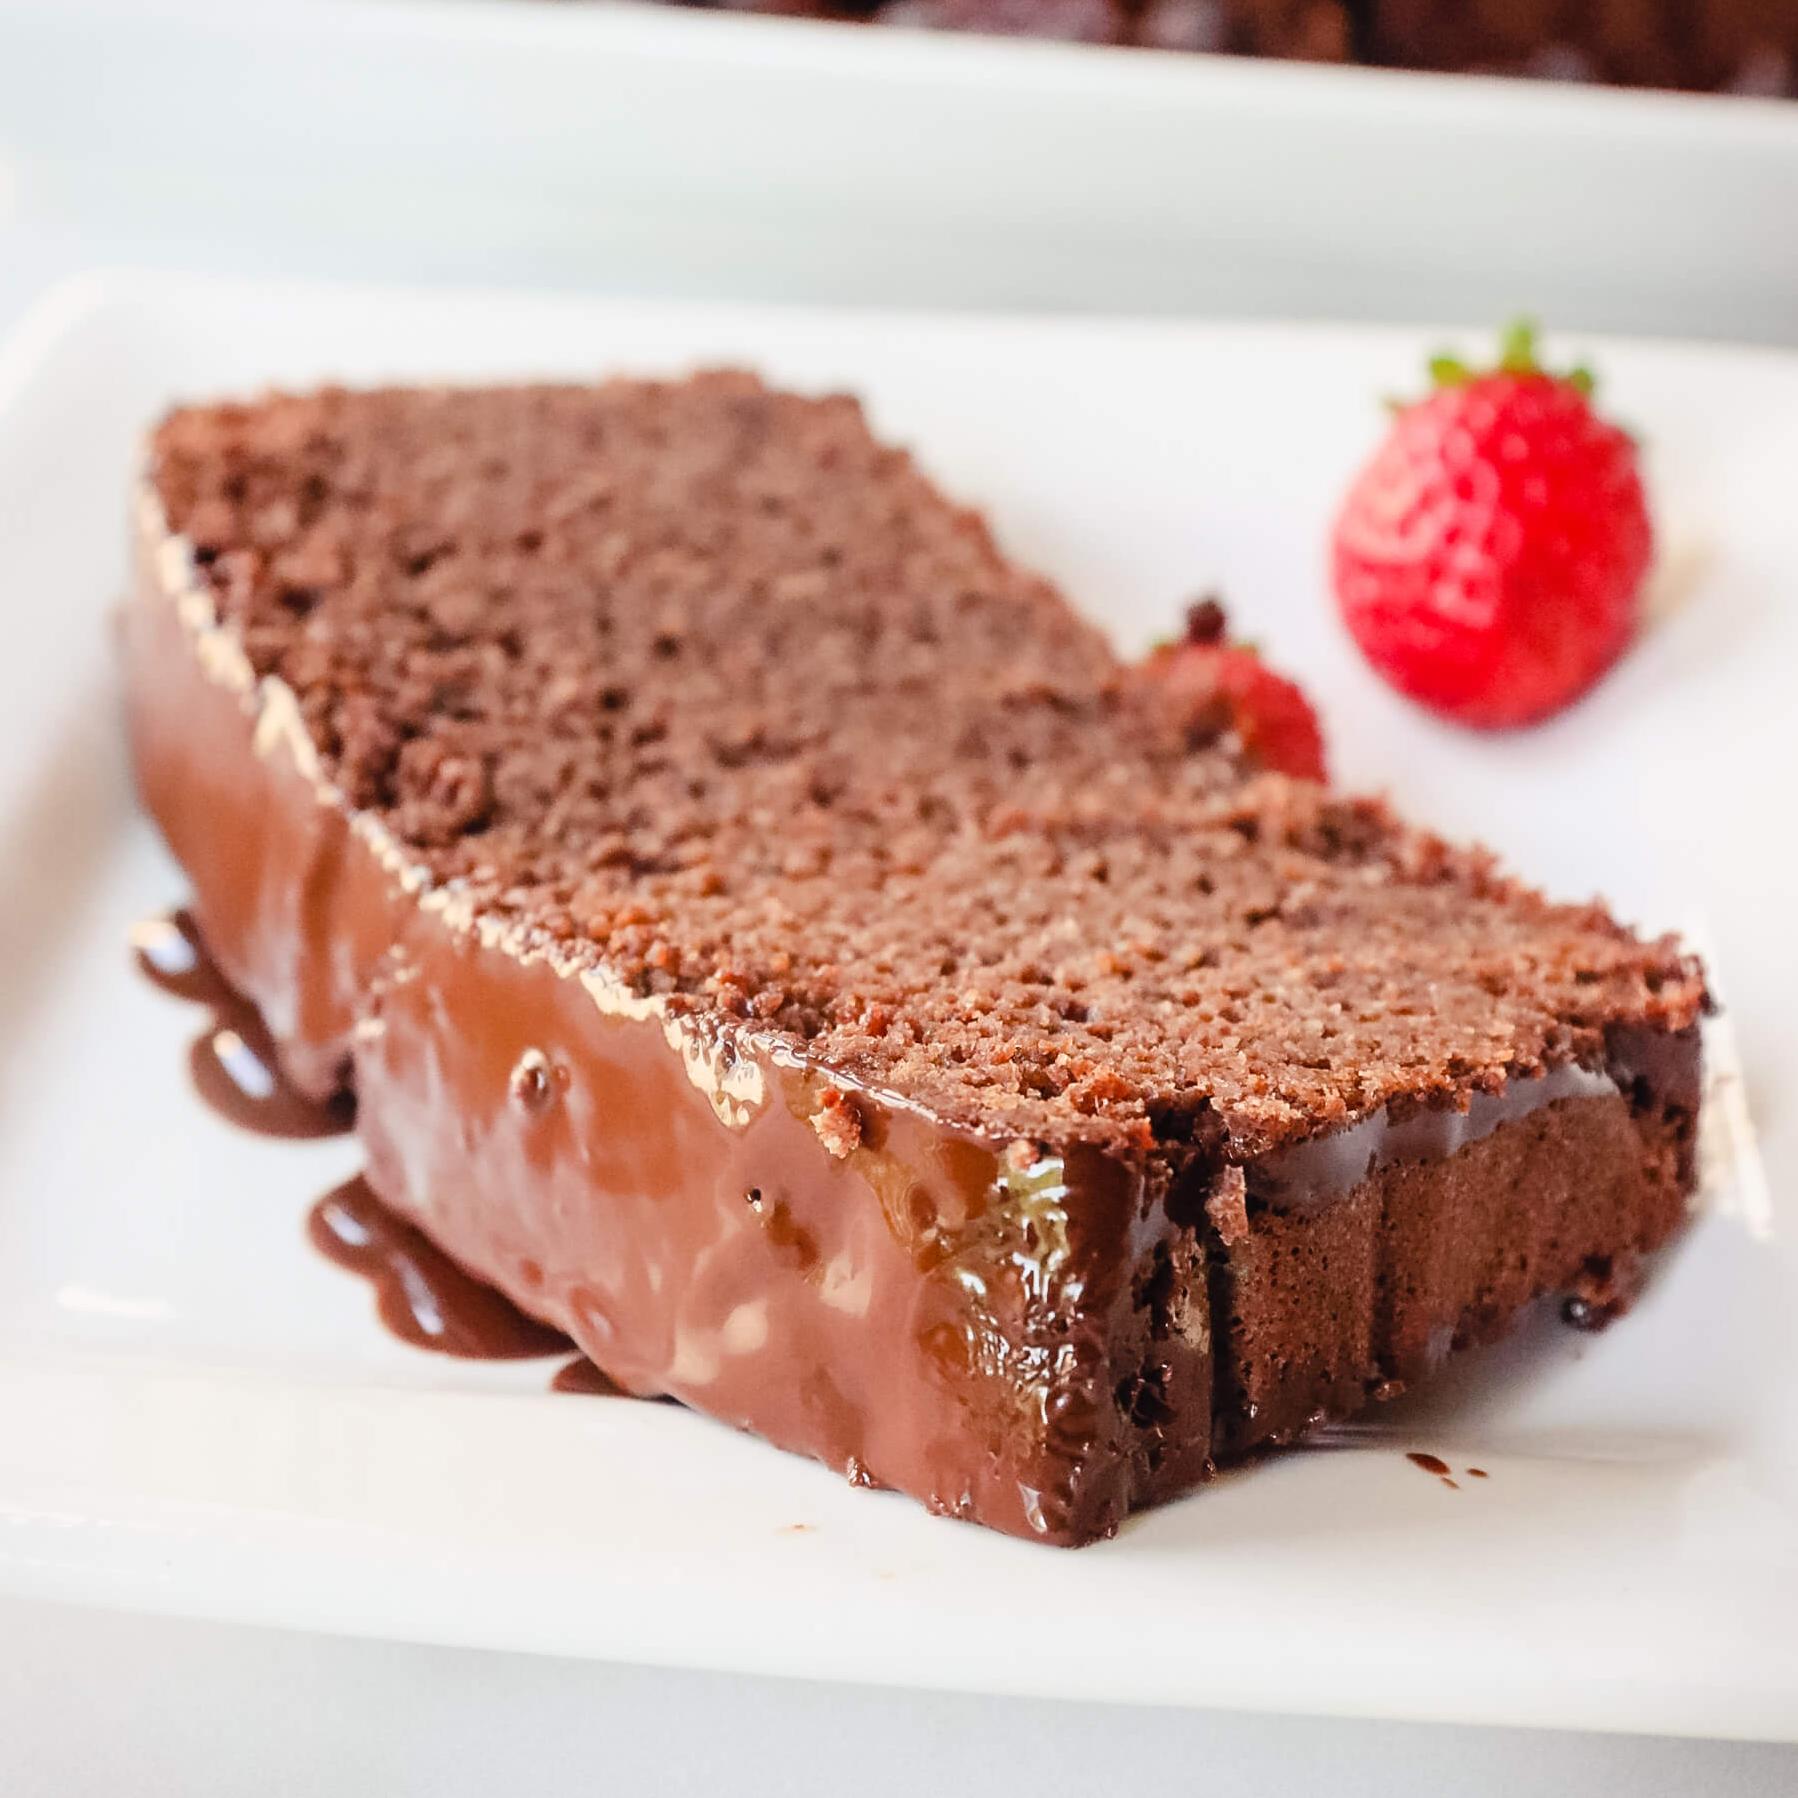  Chocolatey goodness in every slice.